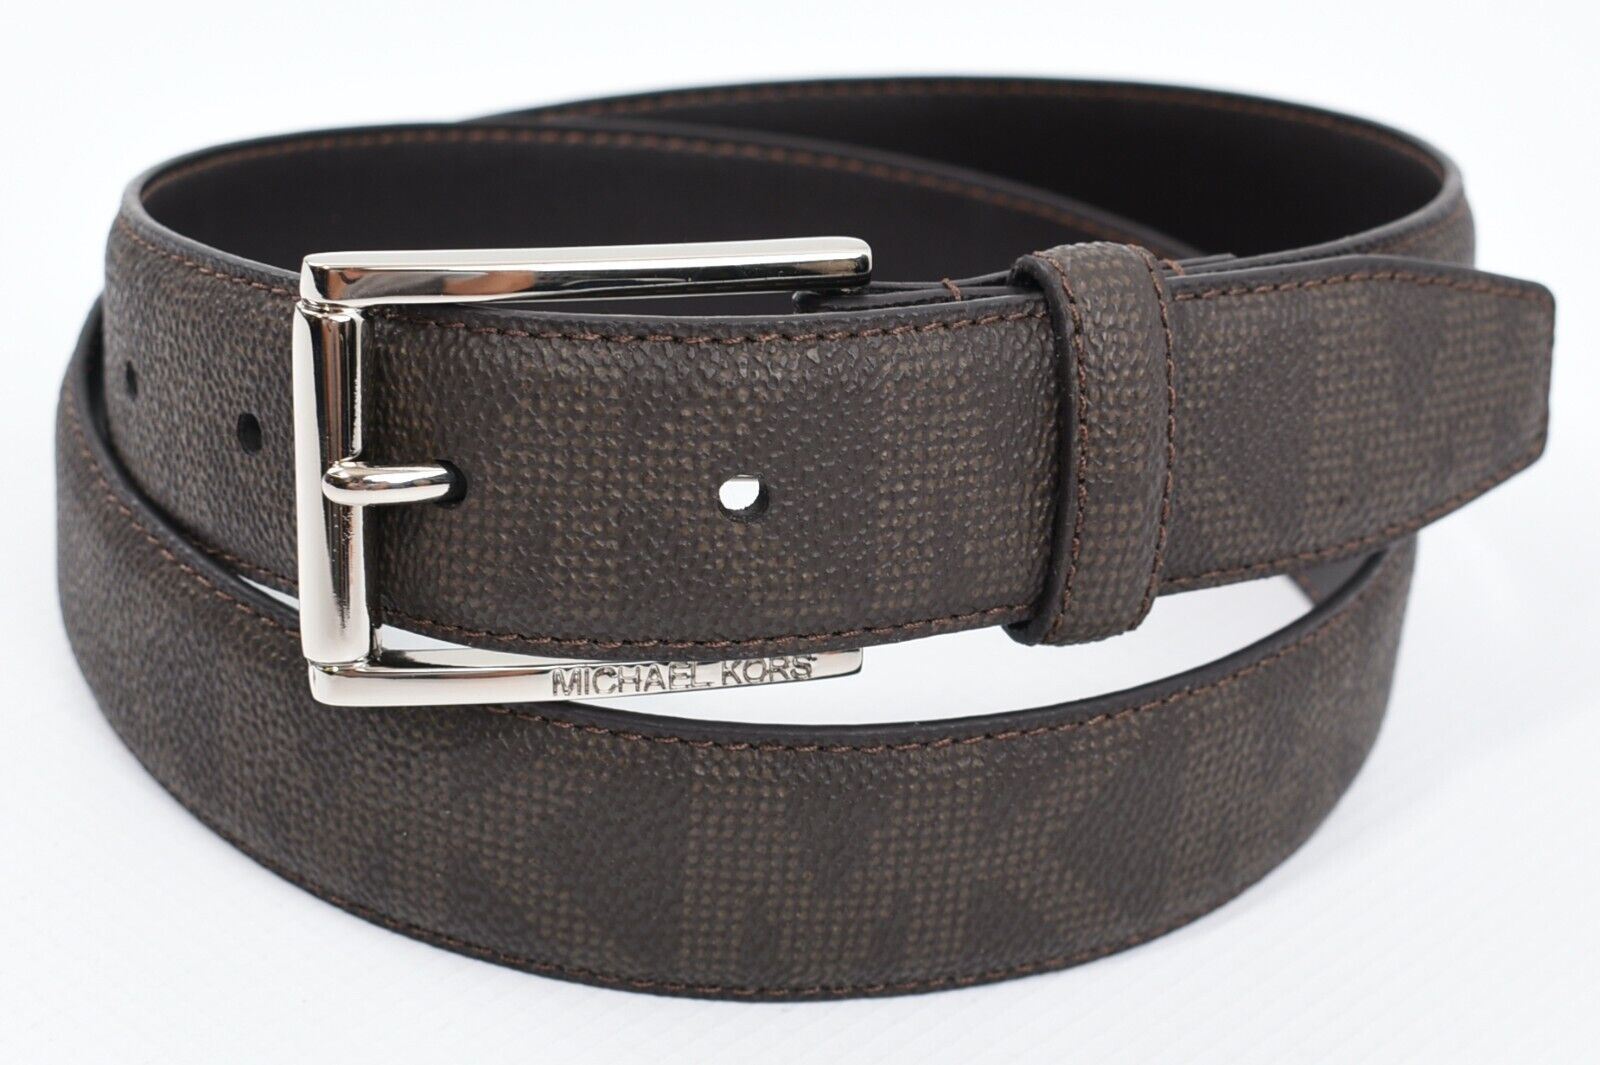 MICHAEL KORS Men's Faux Leather Monogram Belt, Brown, 1.25" wide, size 32